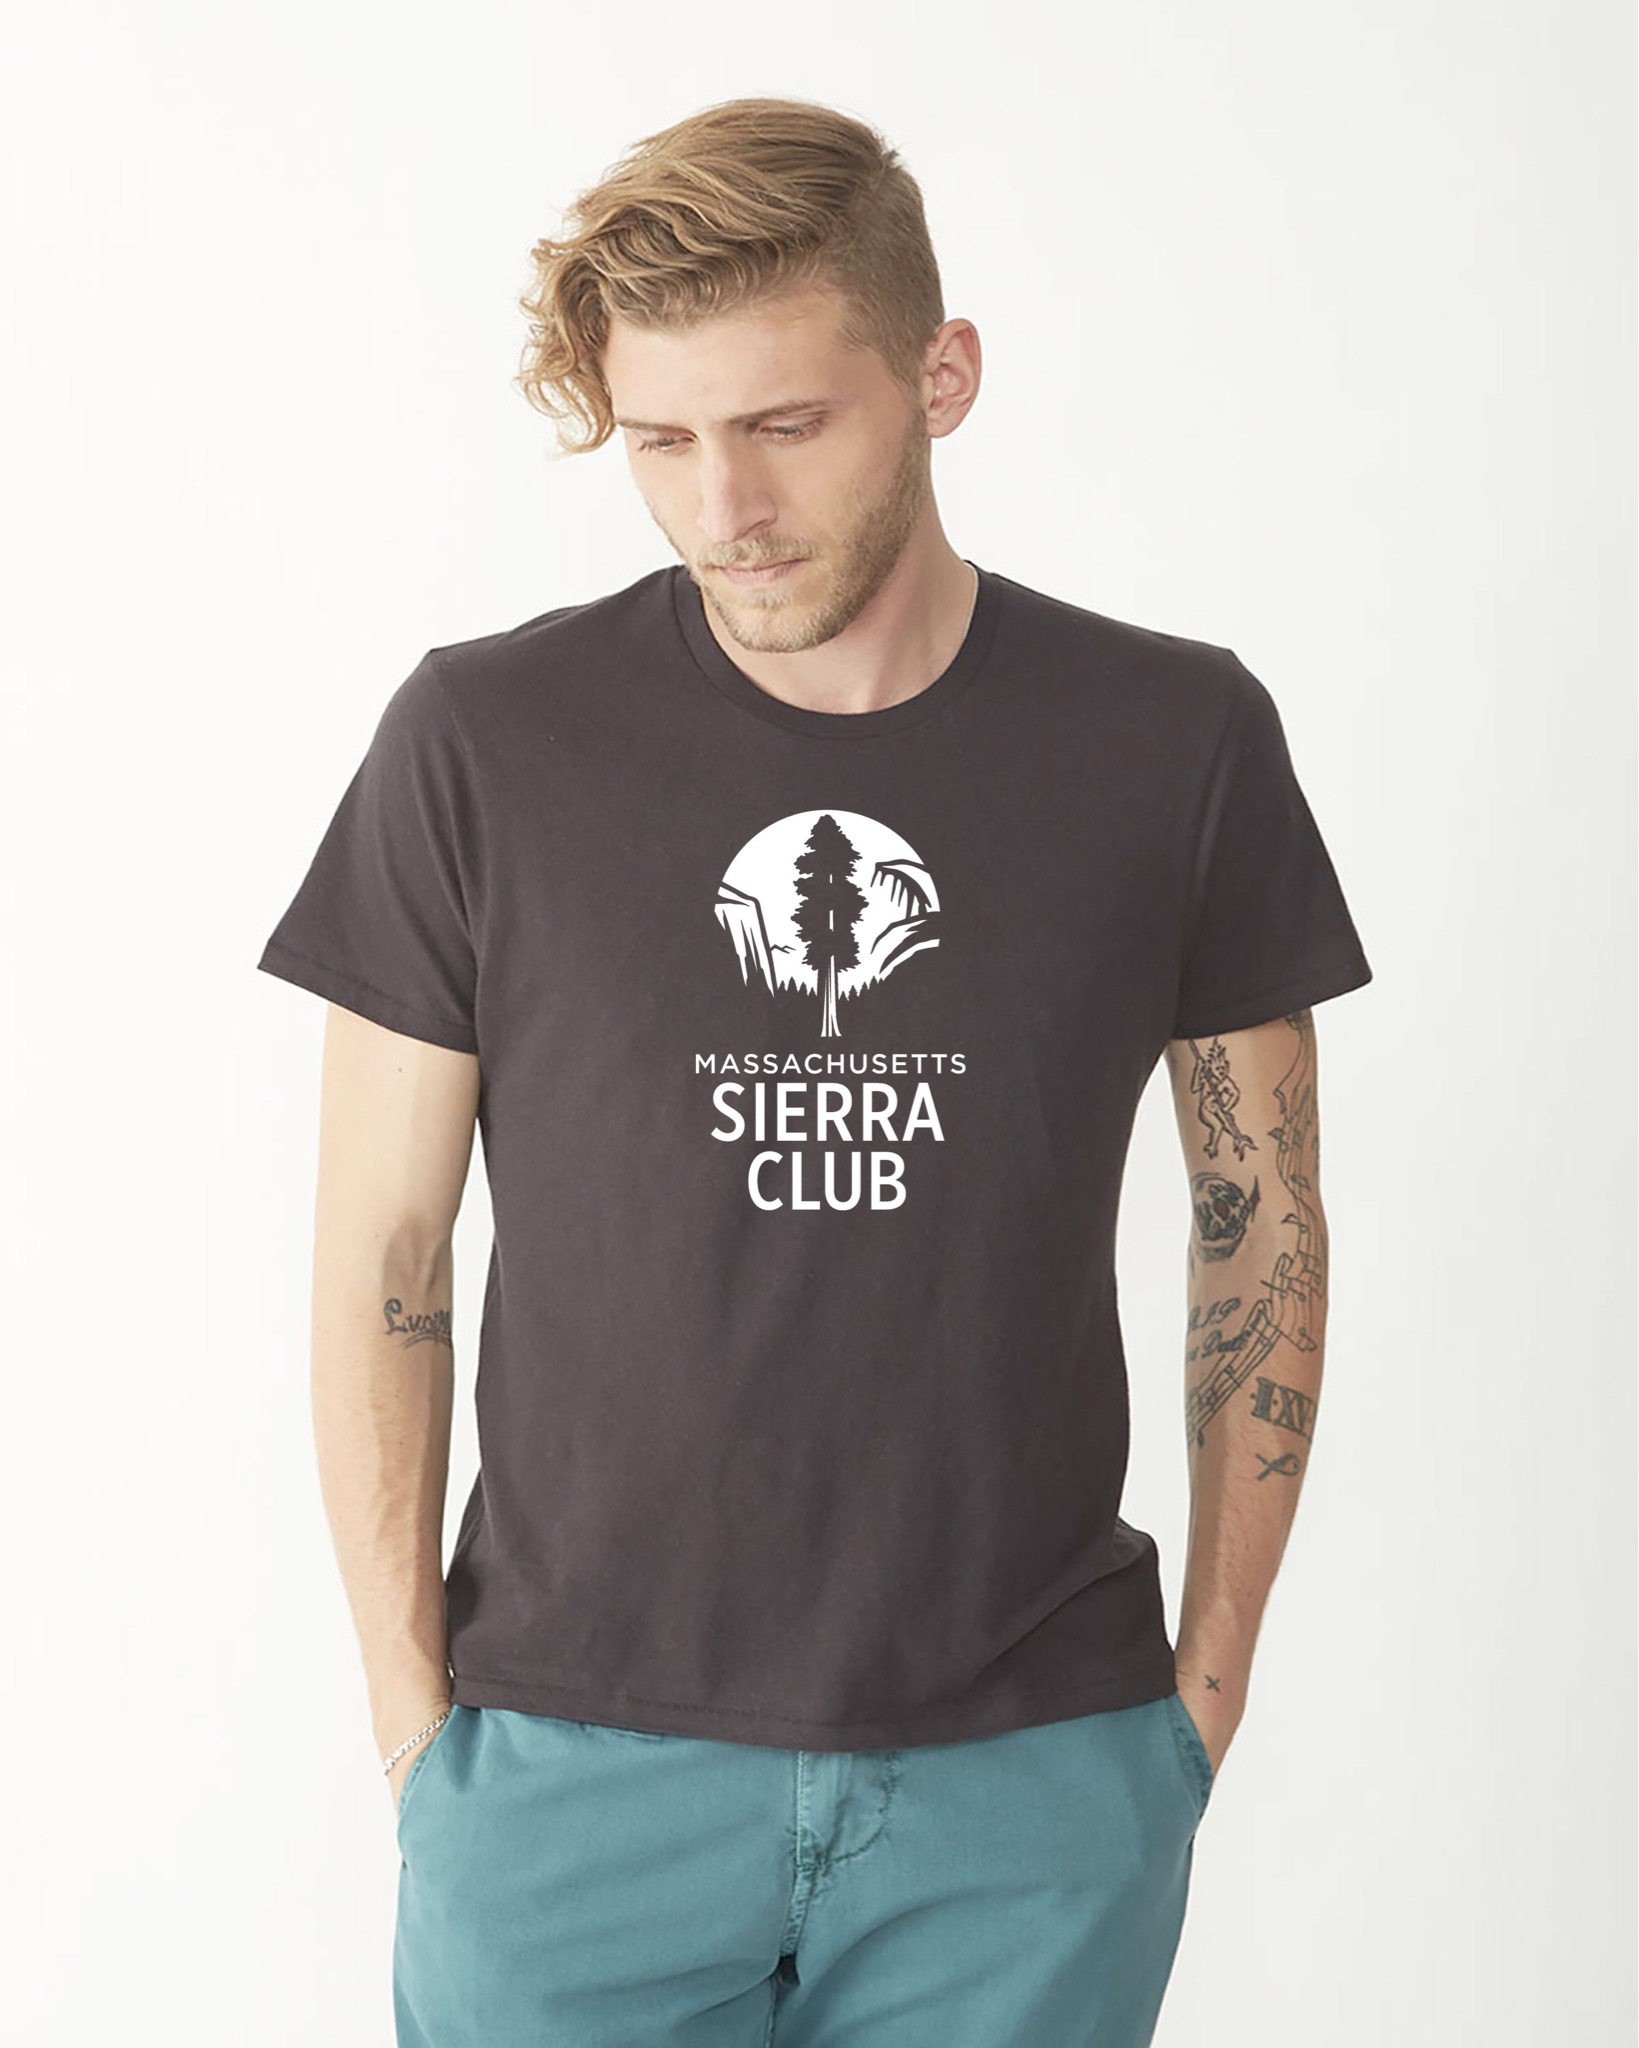 Male model wearing chocolate brown shortsleeved Massachusetts Sierra Club tshirt 